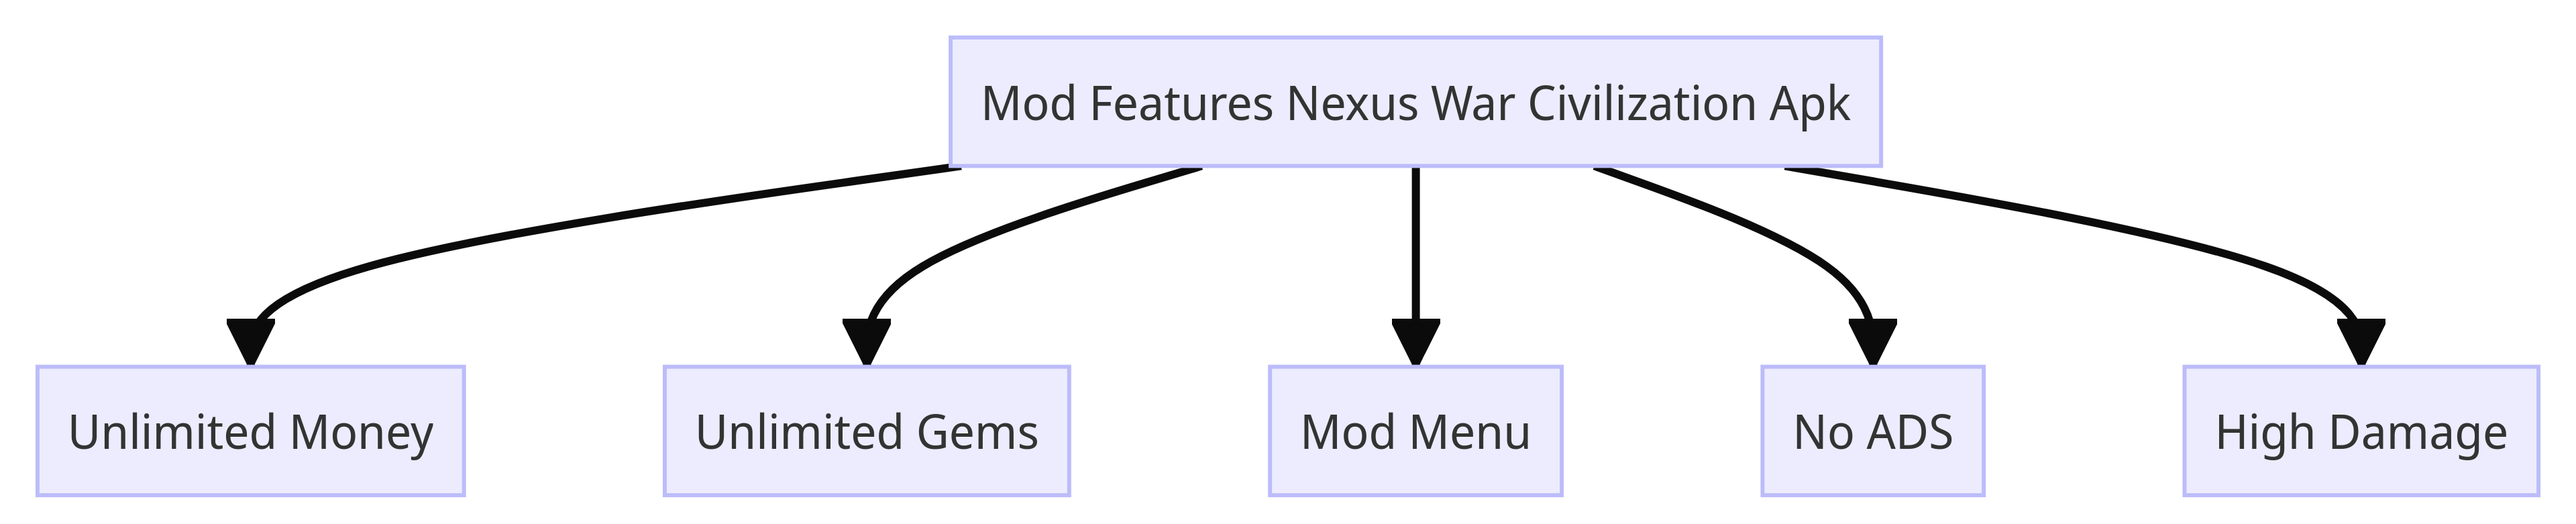 Mod Features Nexus War Civilization Apk